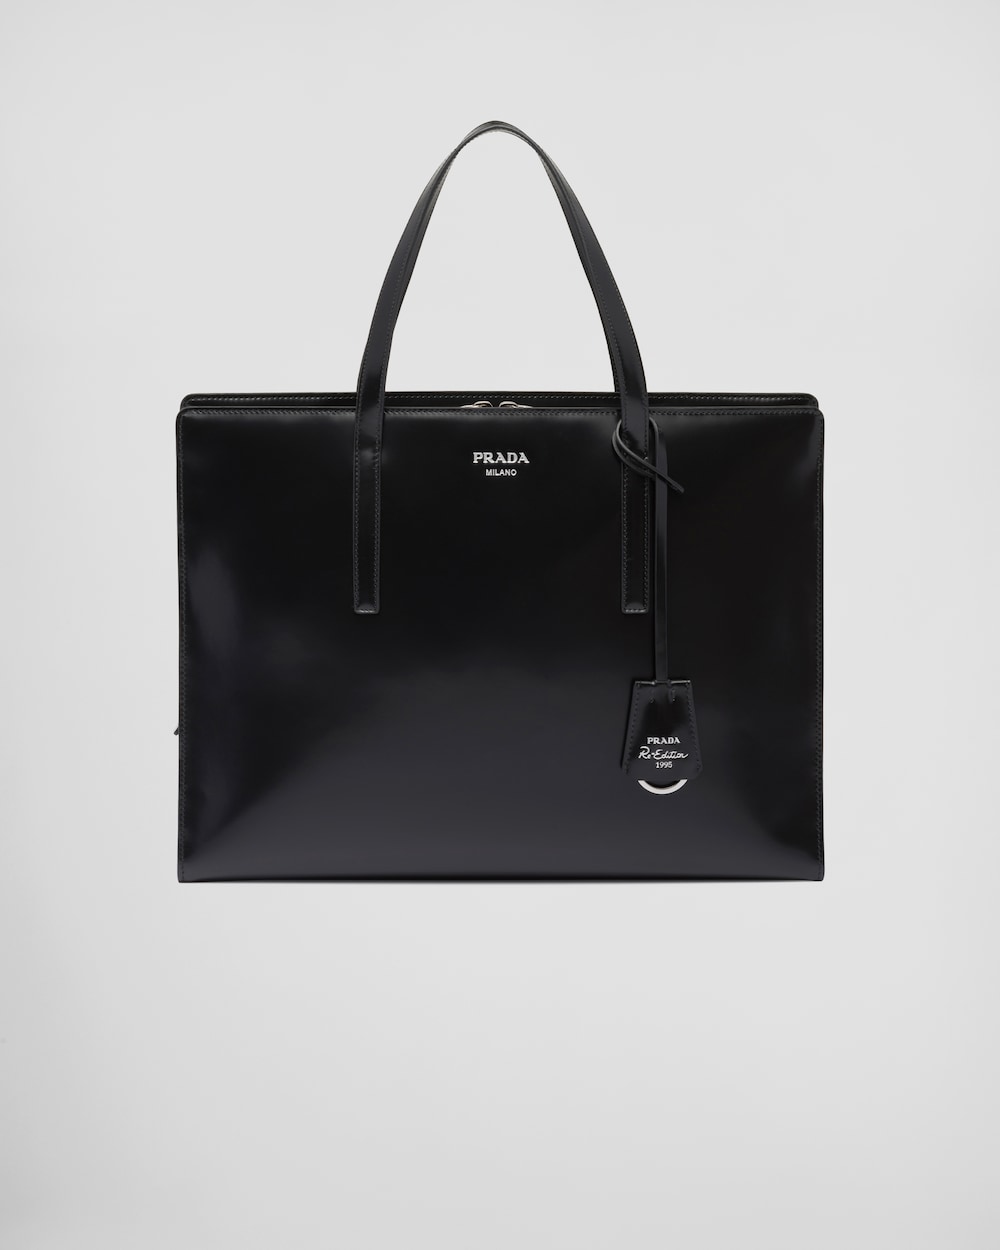 Prada black 1995 bag